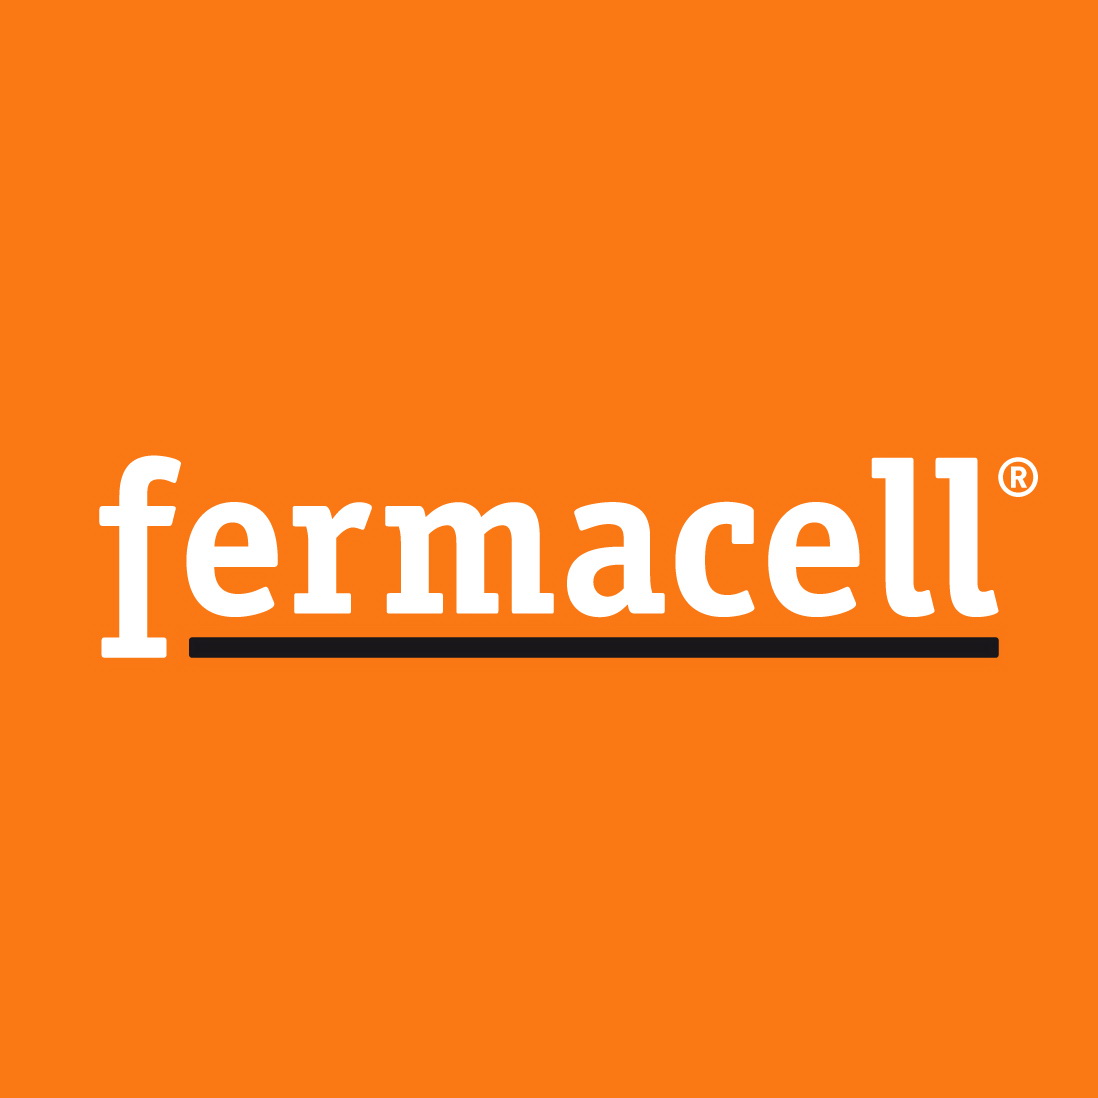 File:Fermacell Logo.jpg - Wikimedia Commons